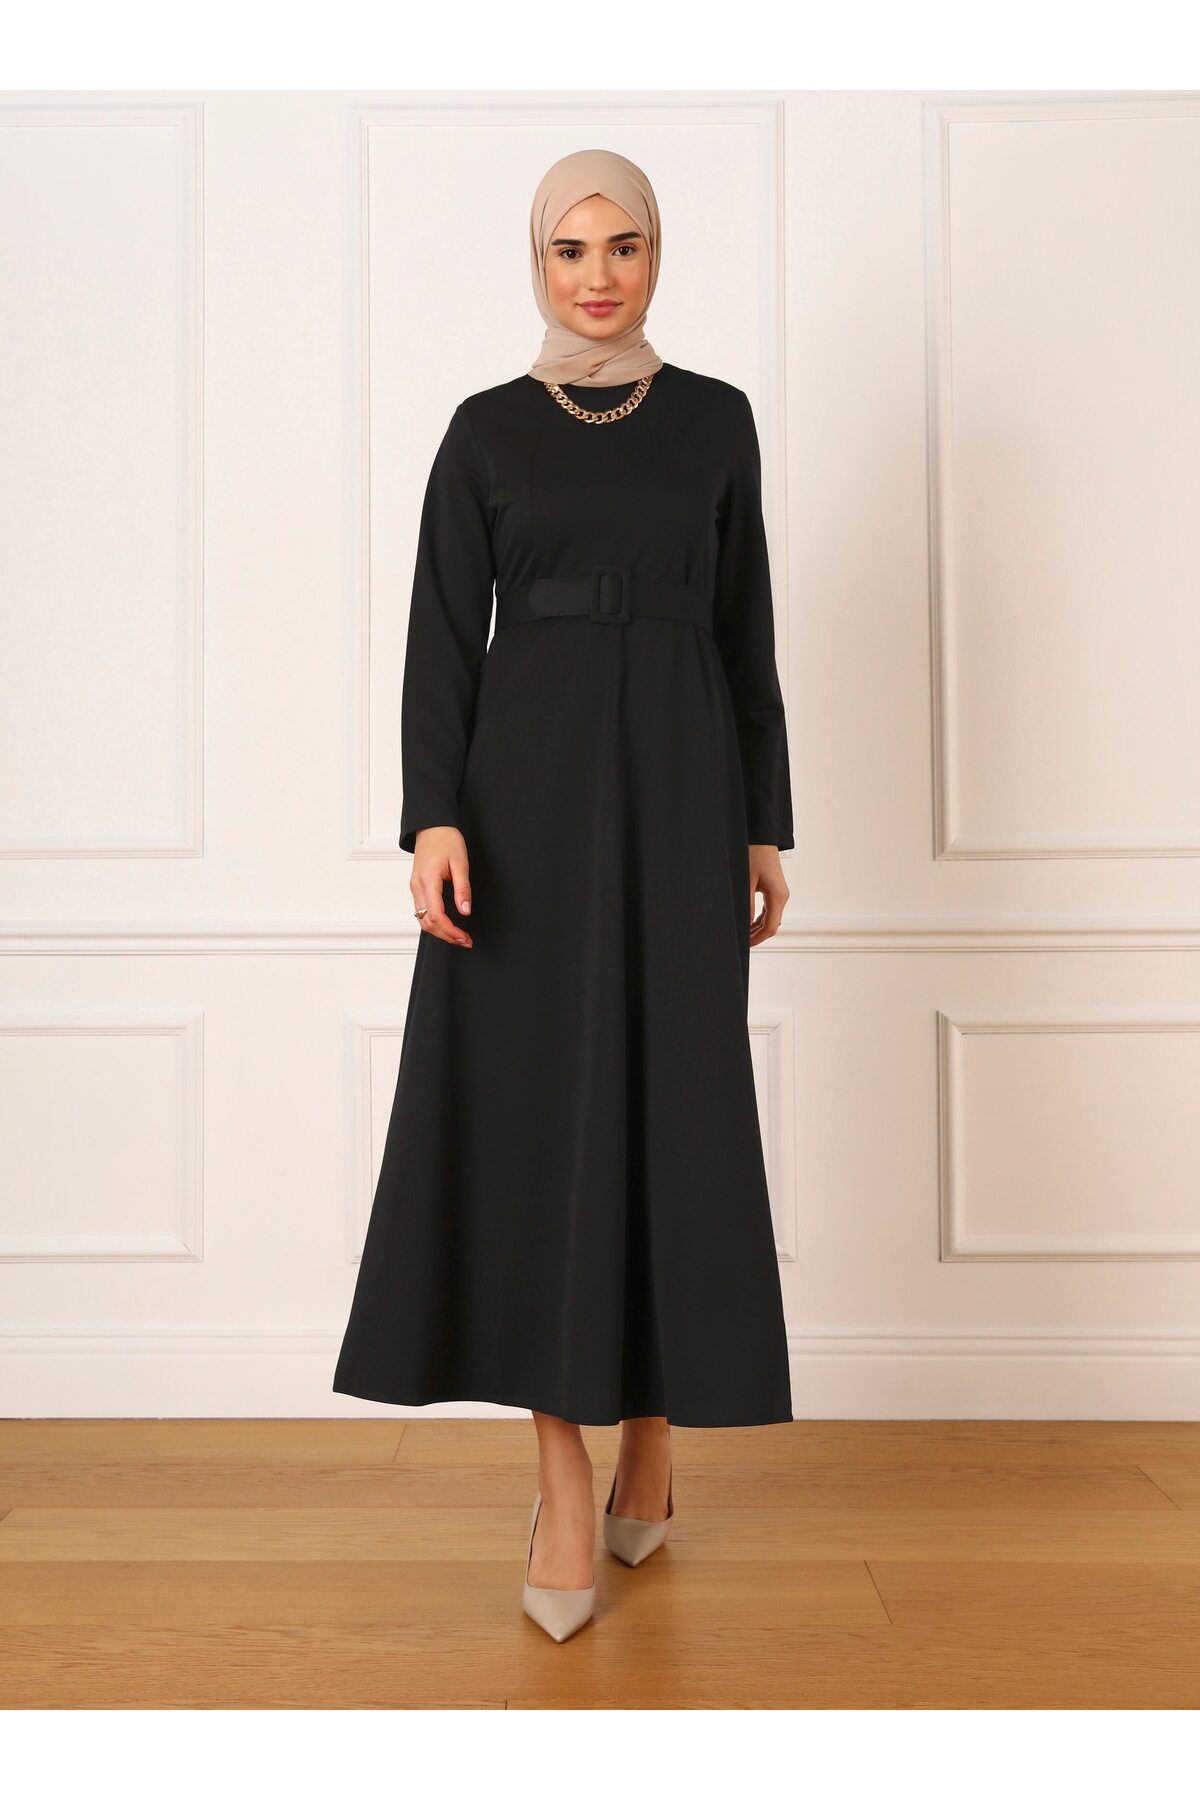 URBAN RESEARCH Marka İtalyan Elbise İpek - Özel Dikim Elbise